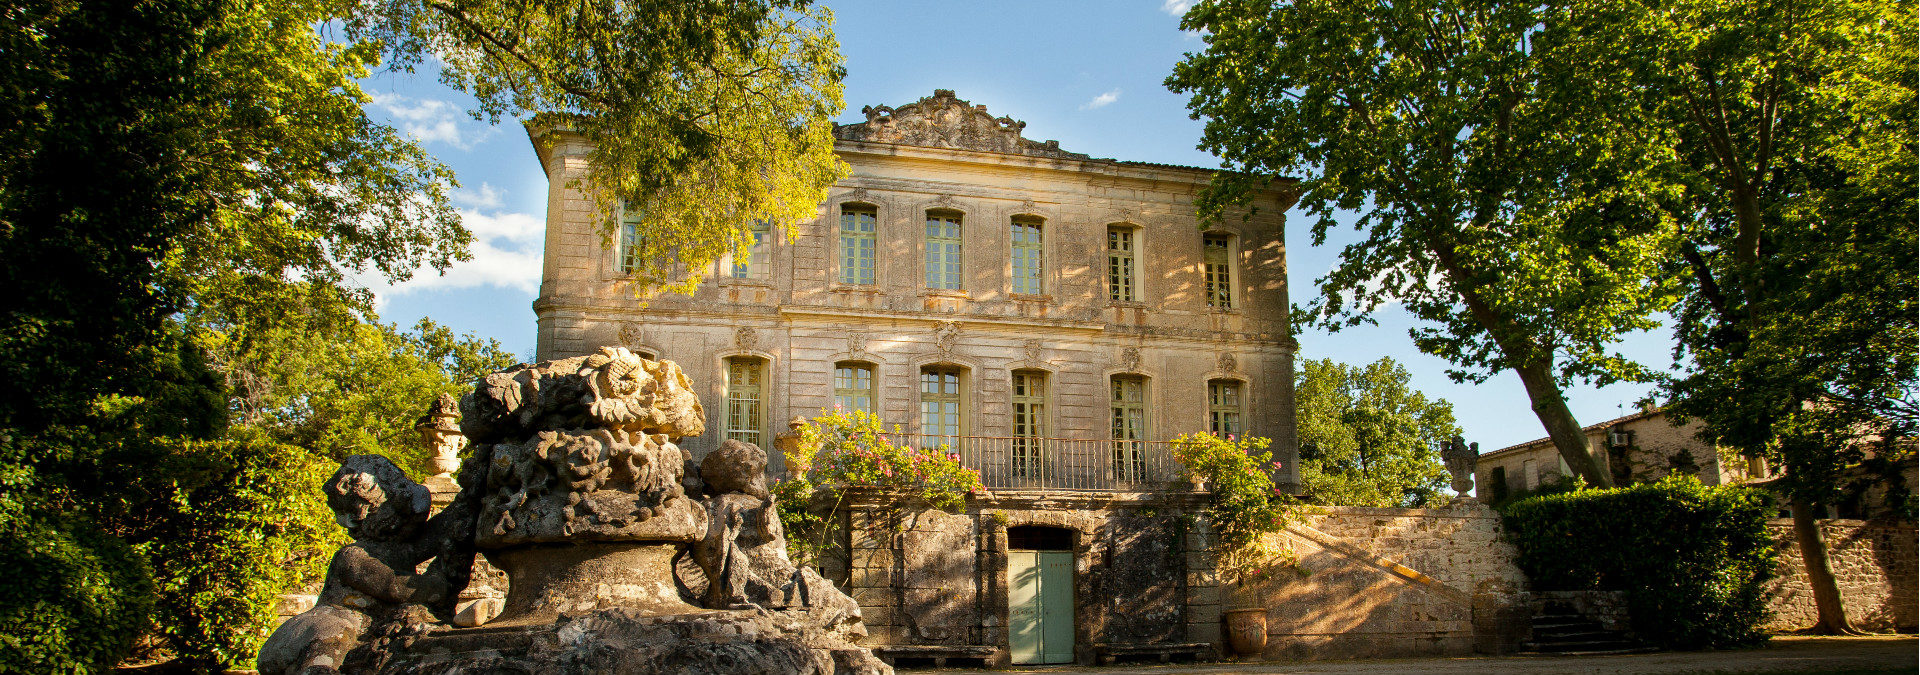 Château de l’Engarran